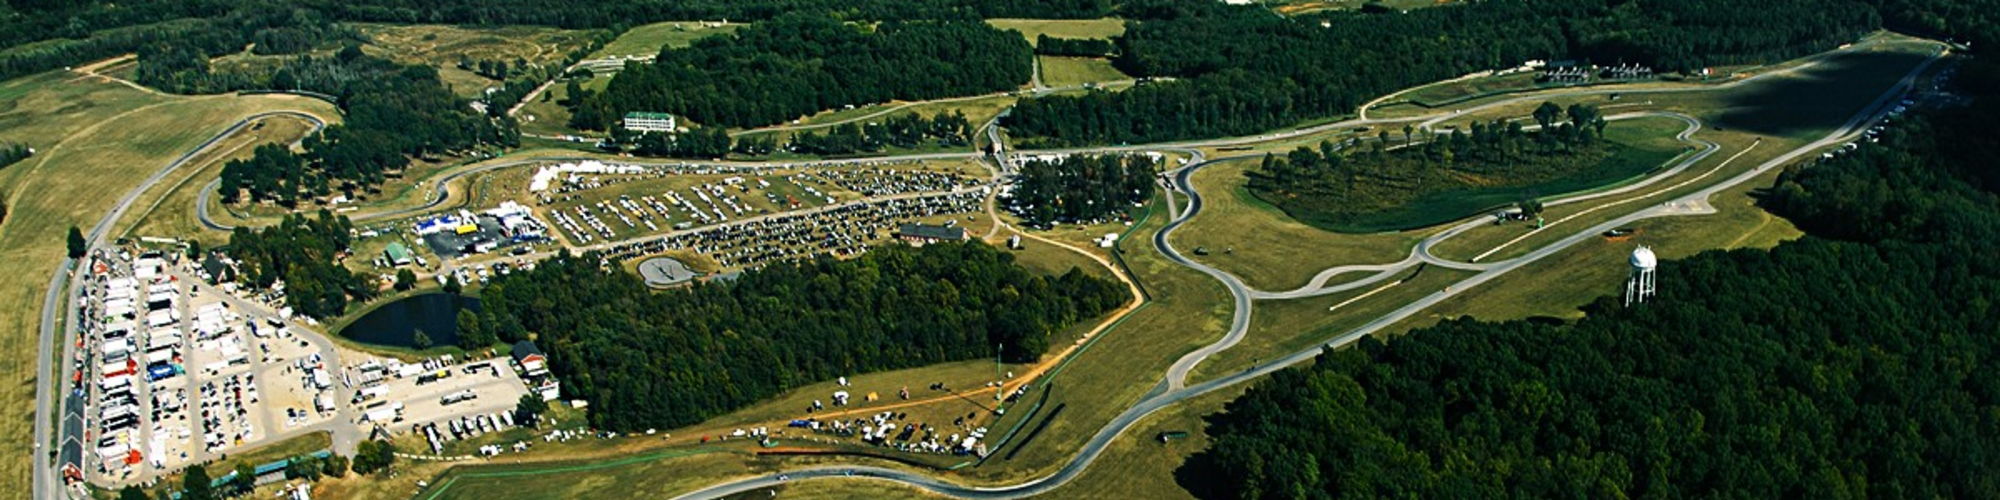 VIRginia International Raceway cover image